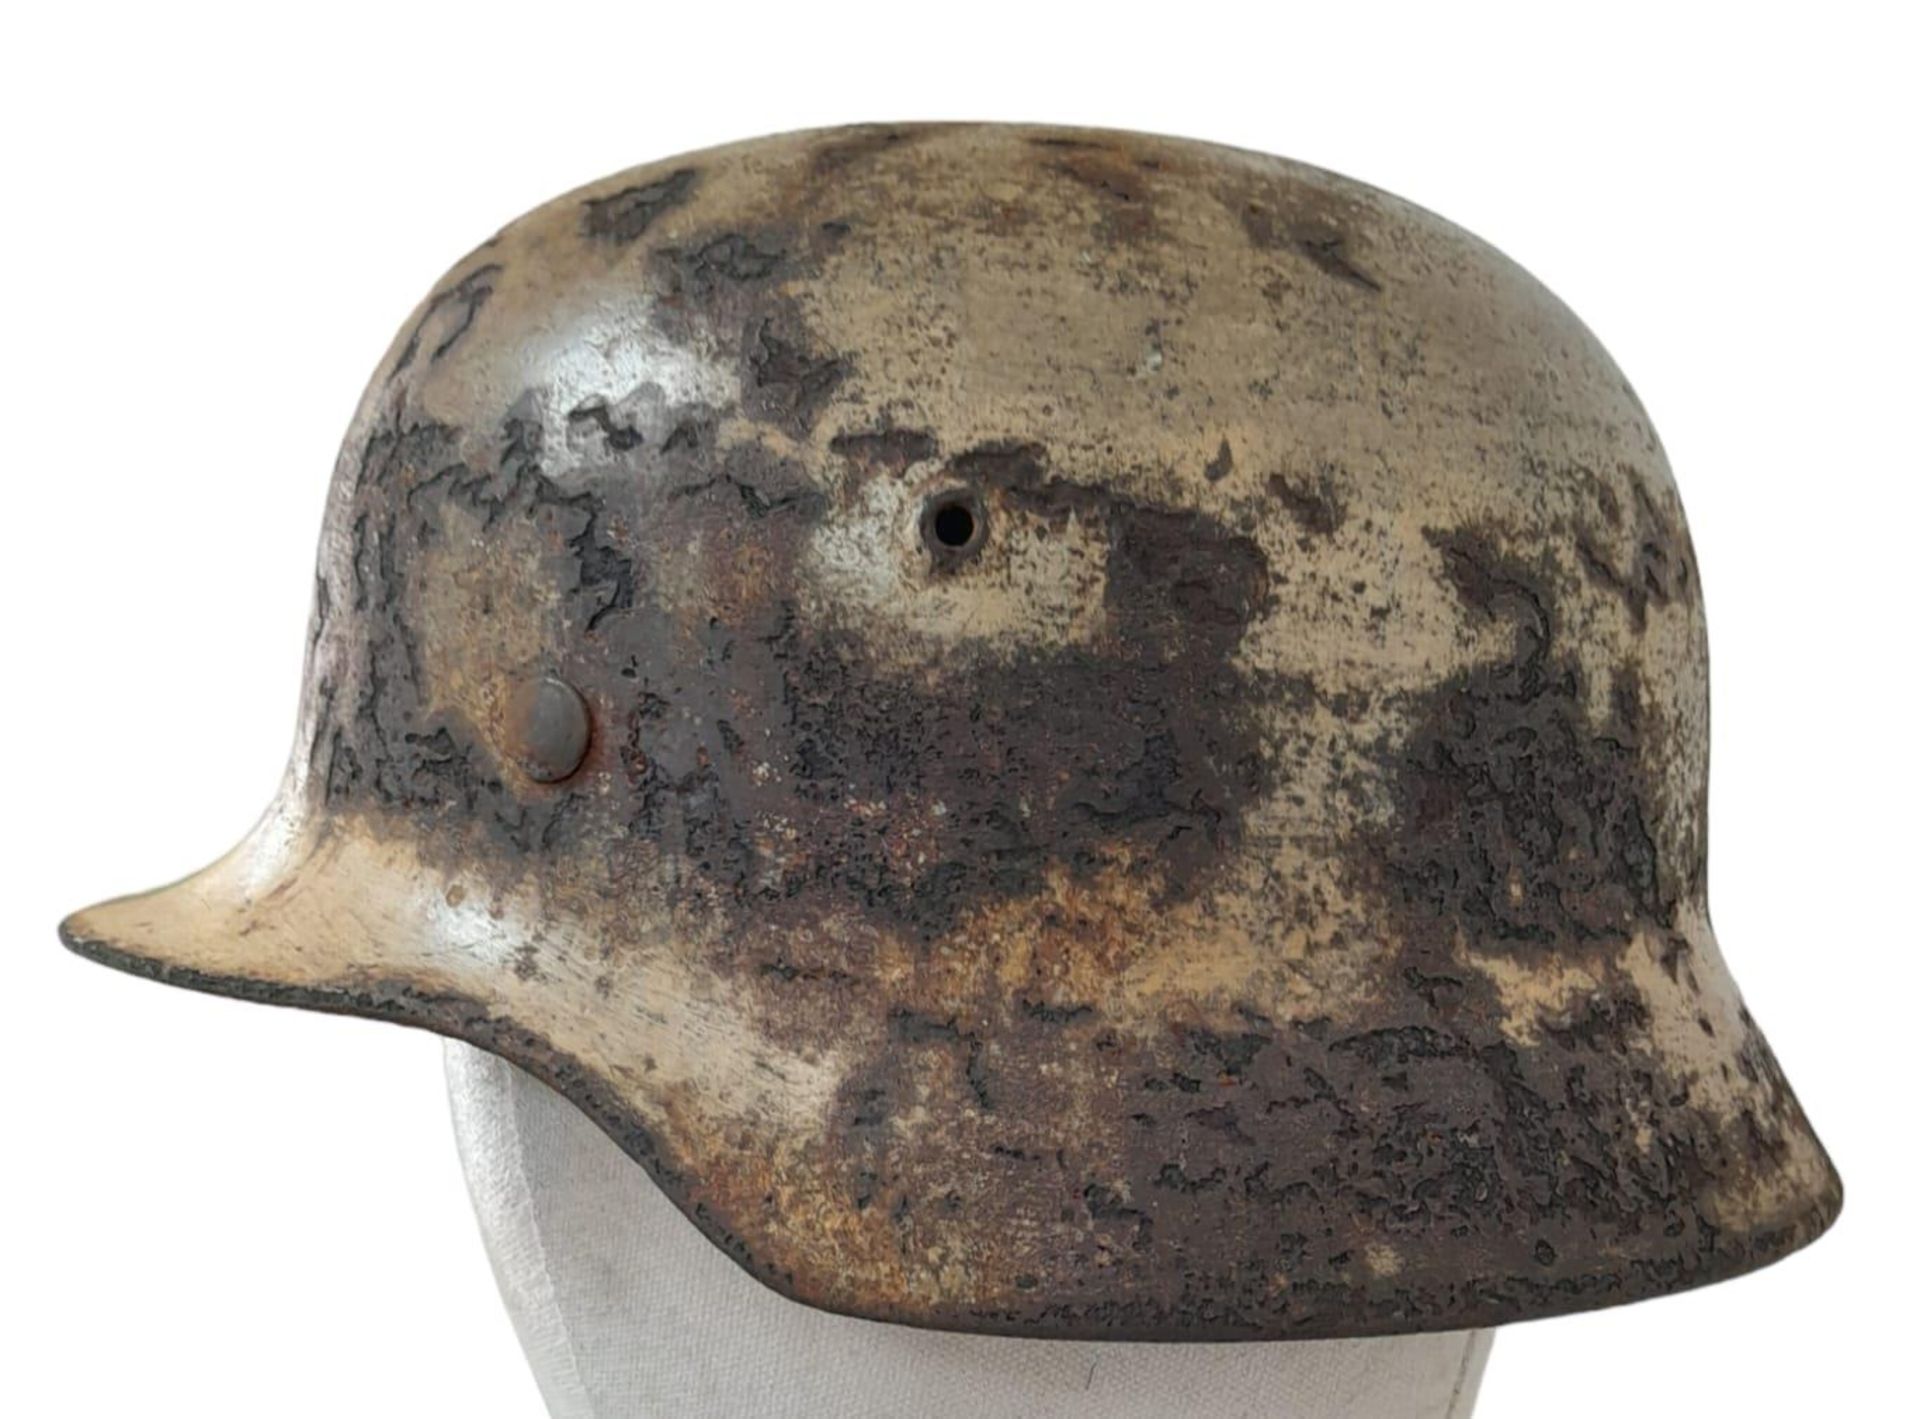 WW2 German M35 Helmet in Winter Camouflage.